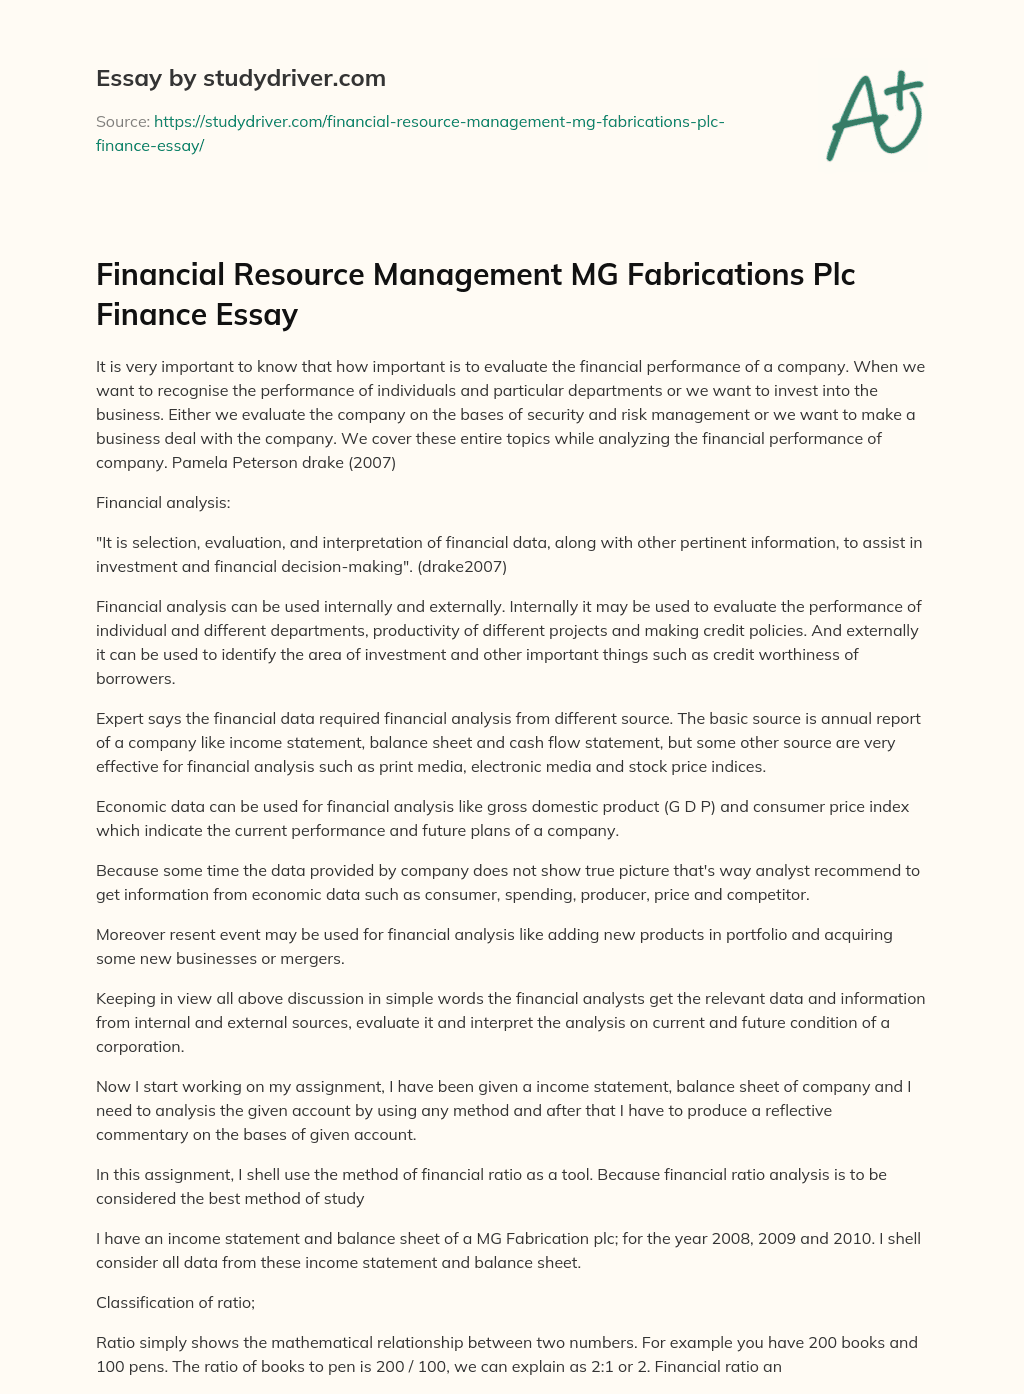 Financial Resource Management MG Fabrications Plc Finance Essay essay